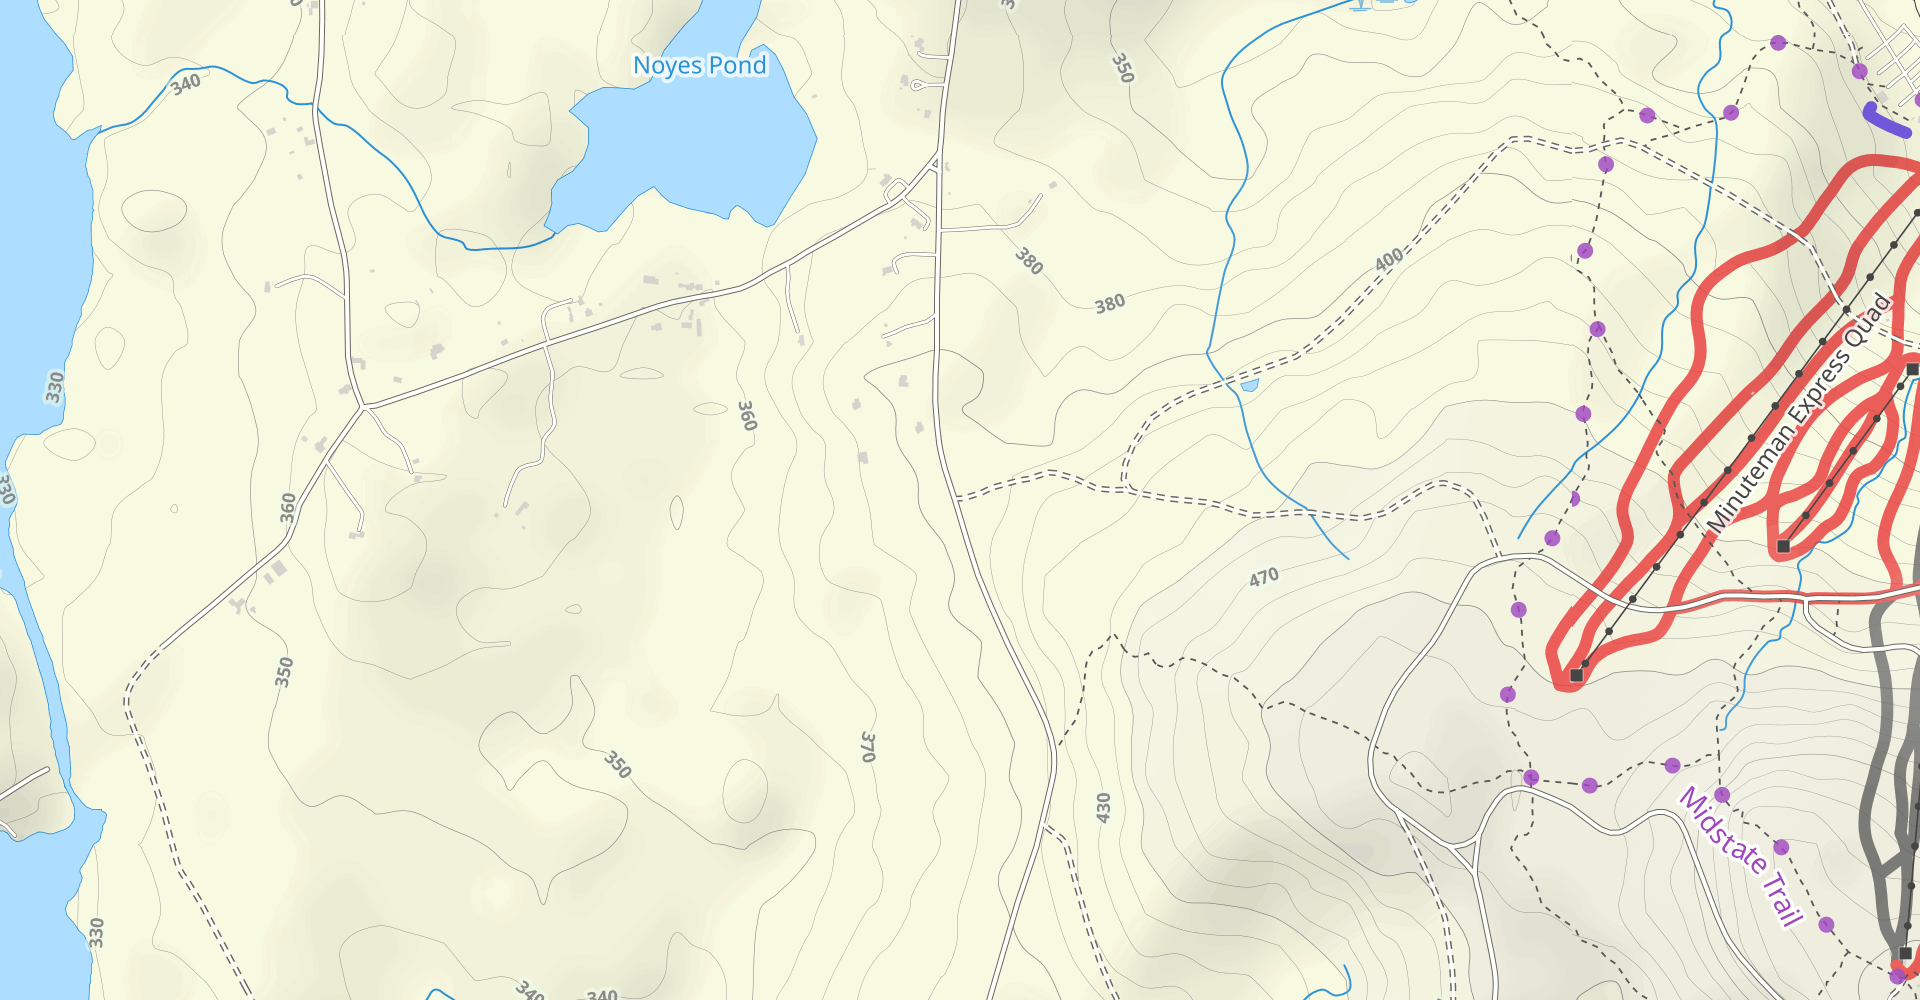 Wachusett Mountain via North Road and Semuhenna Trails